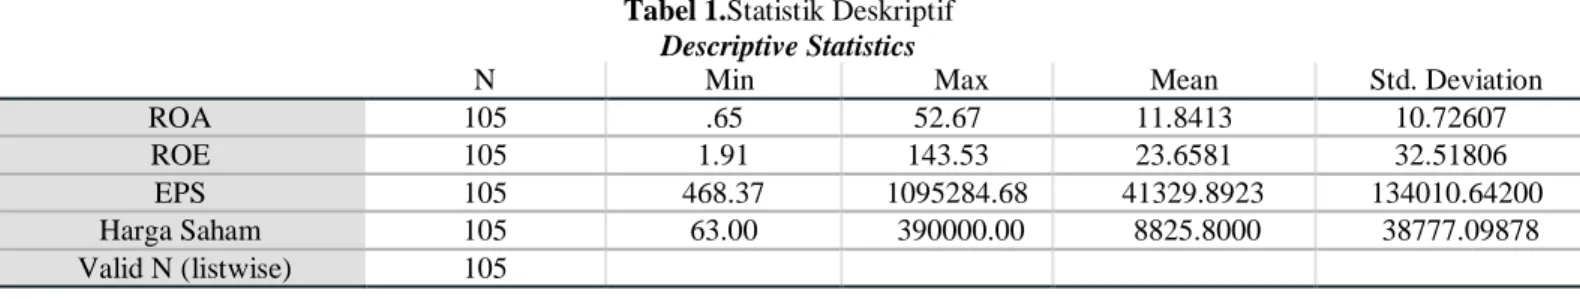 Tabel 1.Statistik Deskriptif  Descriptive Statistics 